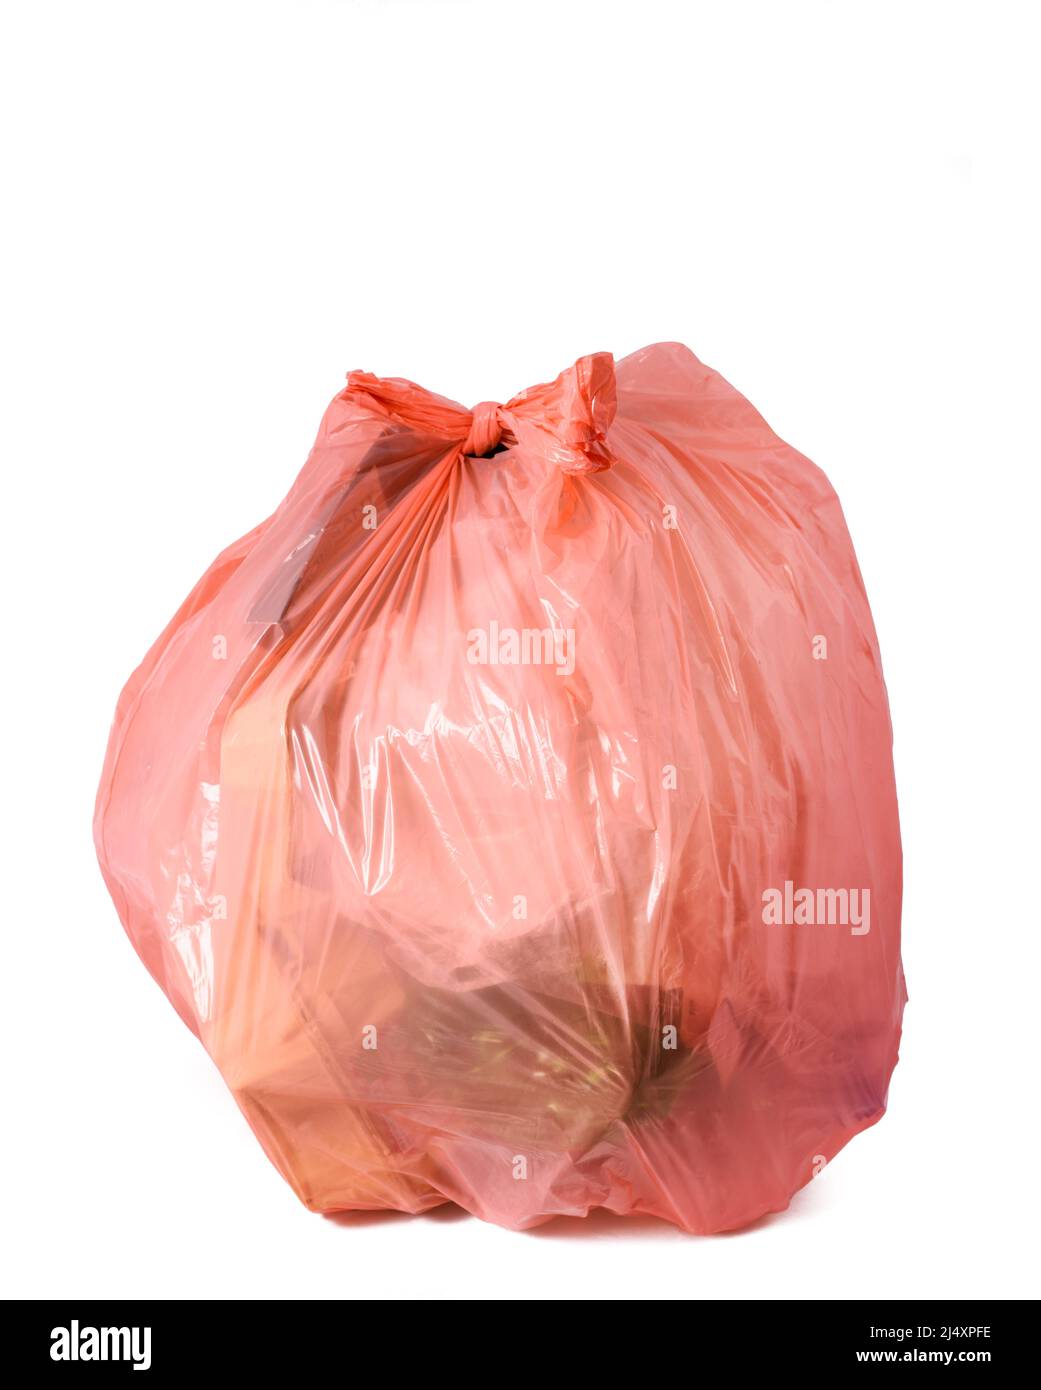 Garbage bag isolated on white background Stock Photo